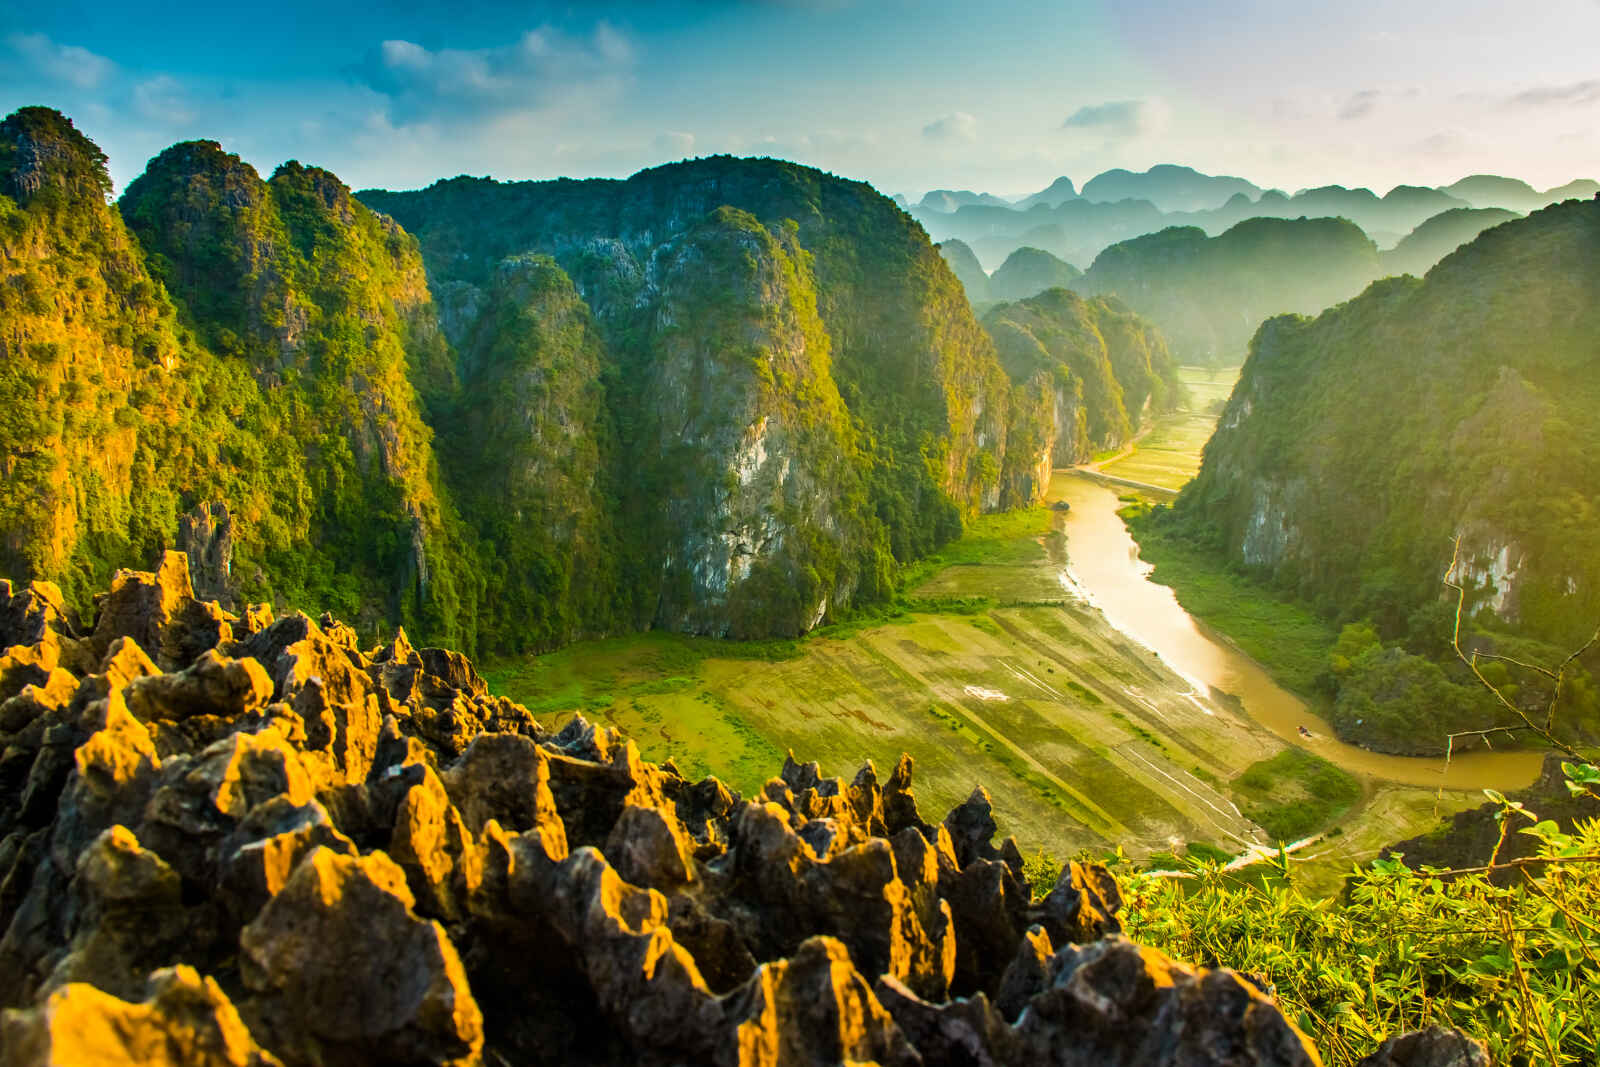 Mua Cave, Ninh Binh, Vietnam